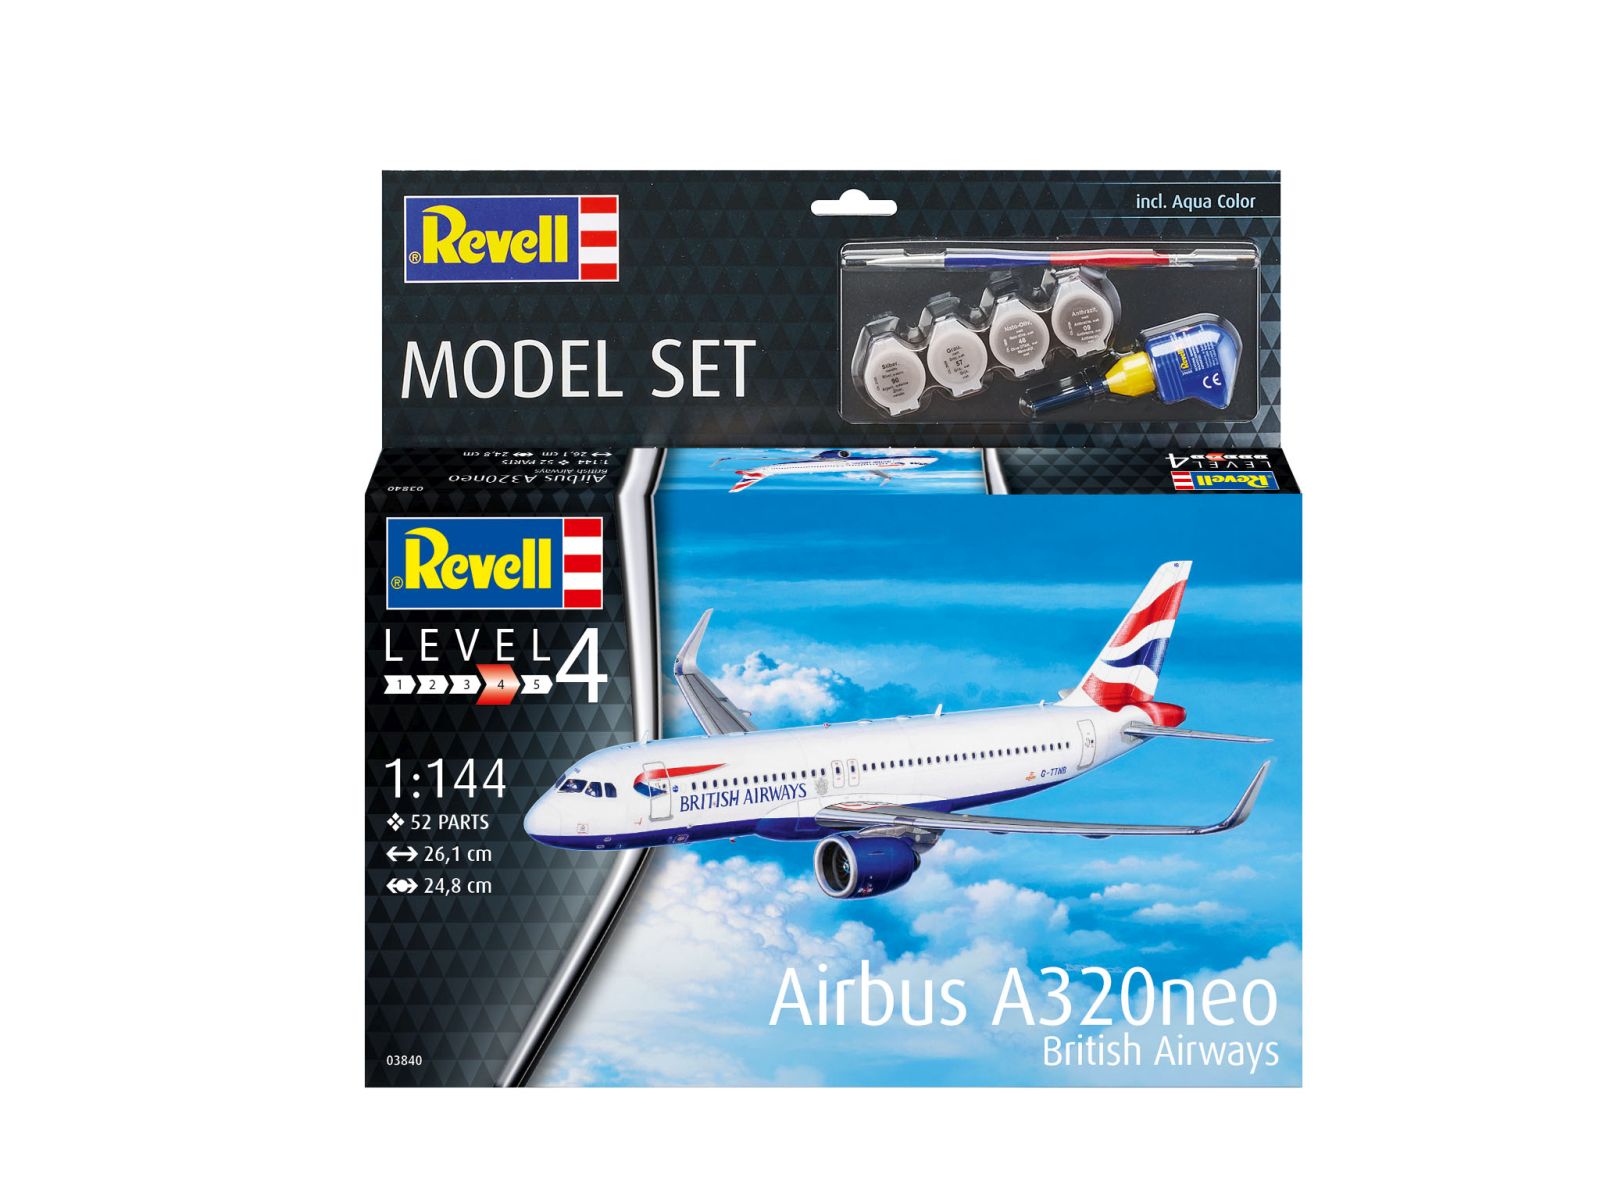 Revell 63840 - Model Set Airbus A320neo British Airways